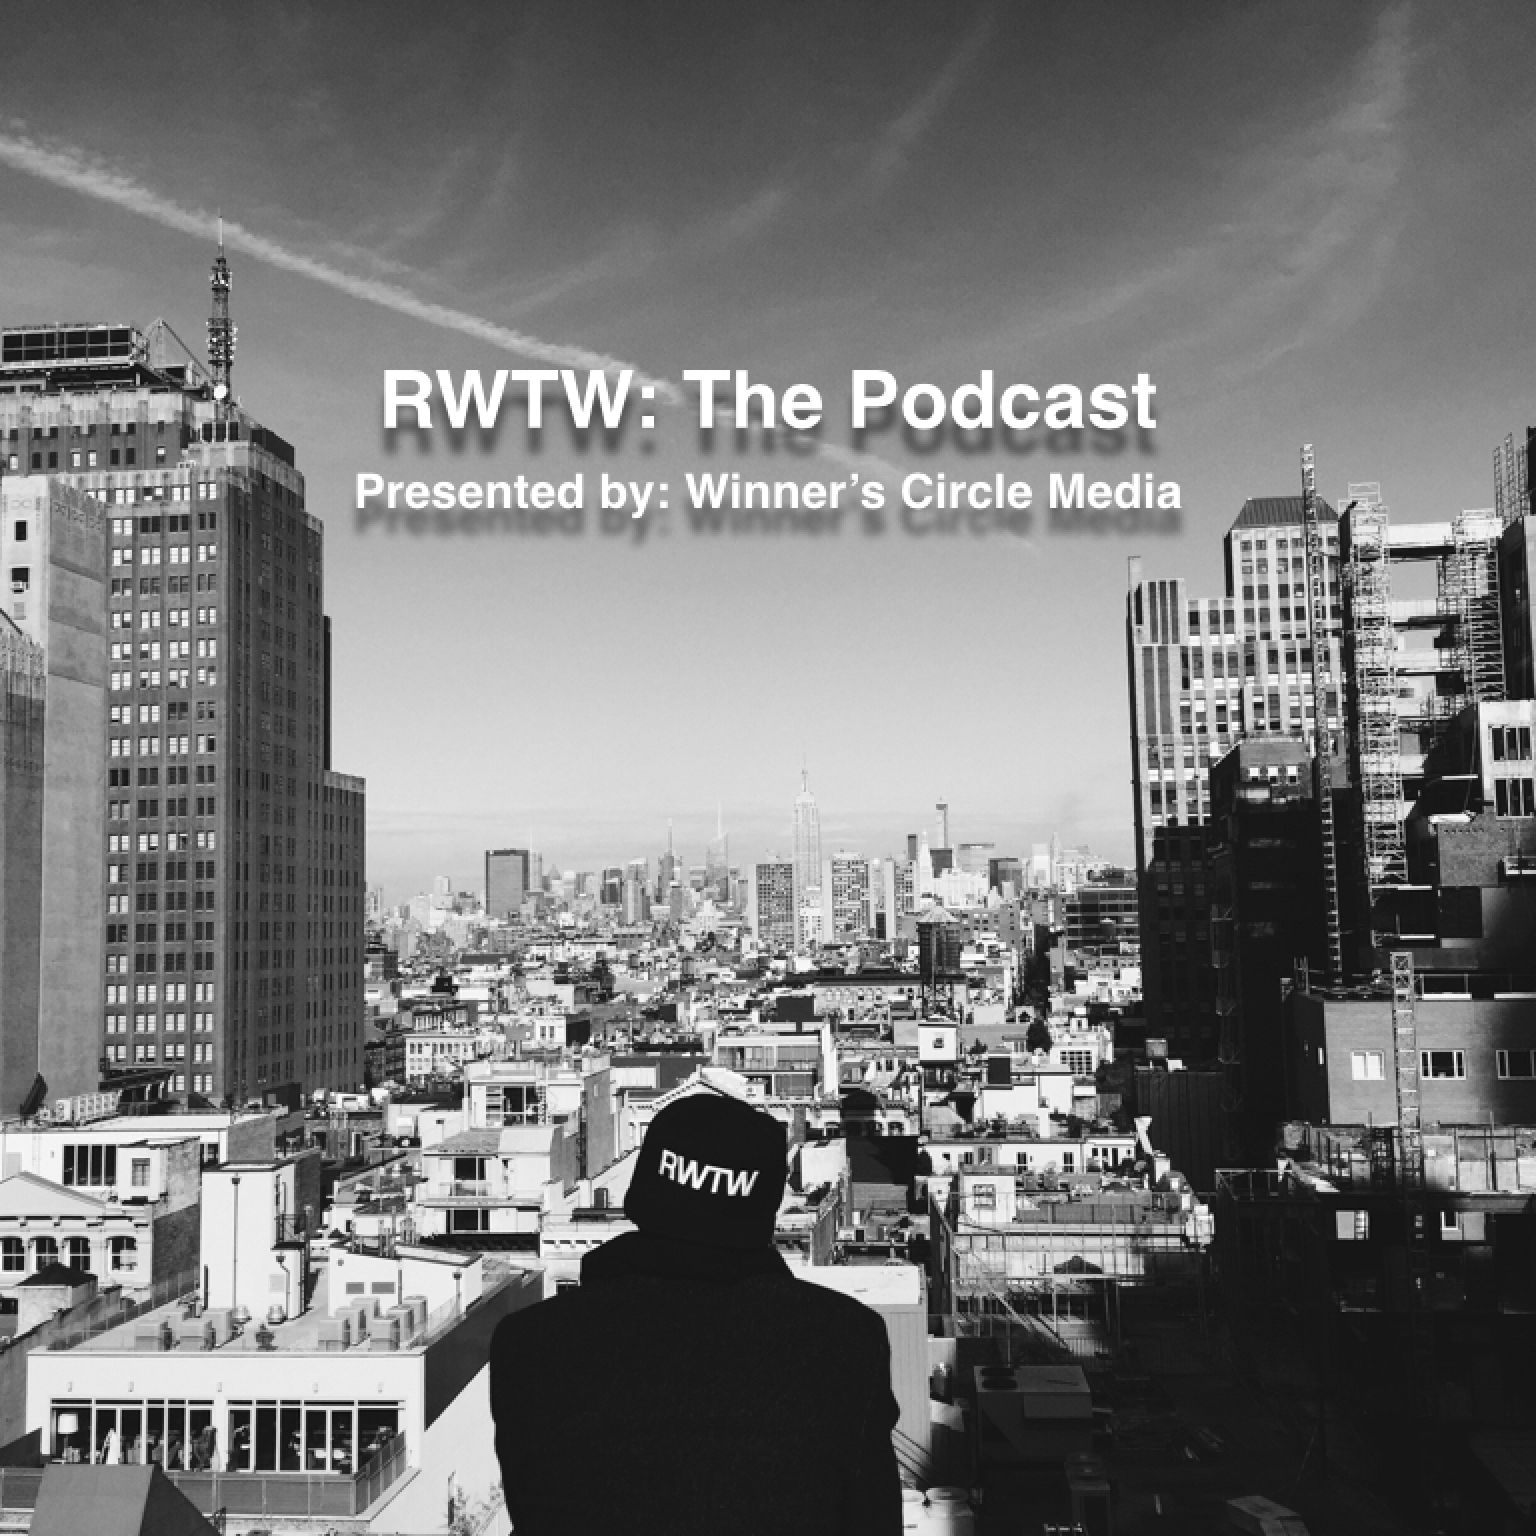 RWTW: The Podcast